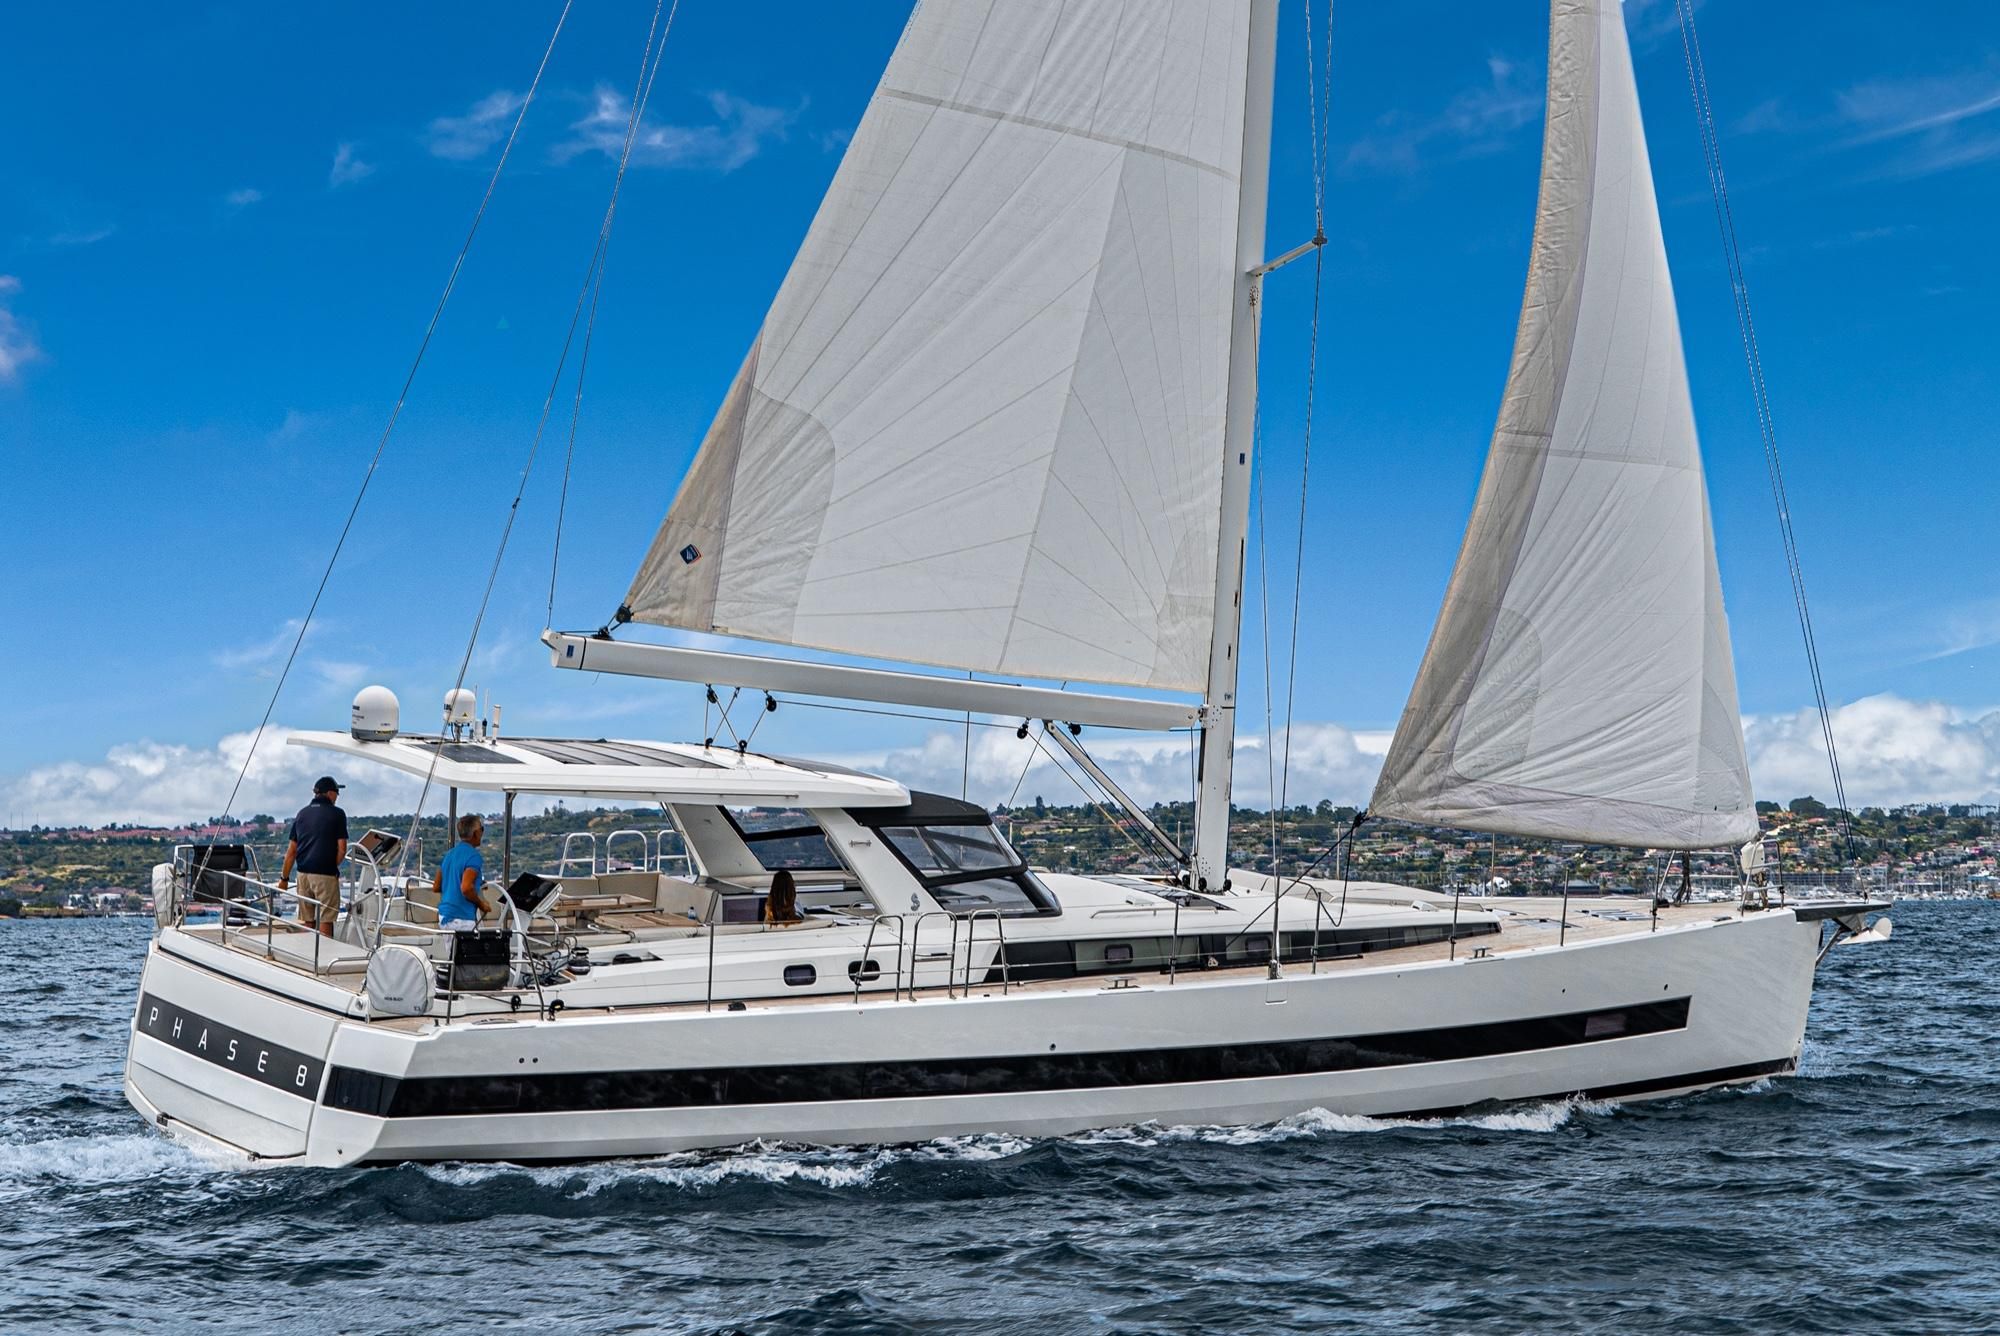 beneteau oceanis yachts for sale uk